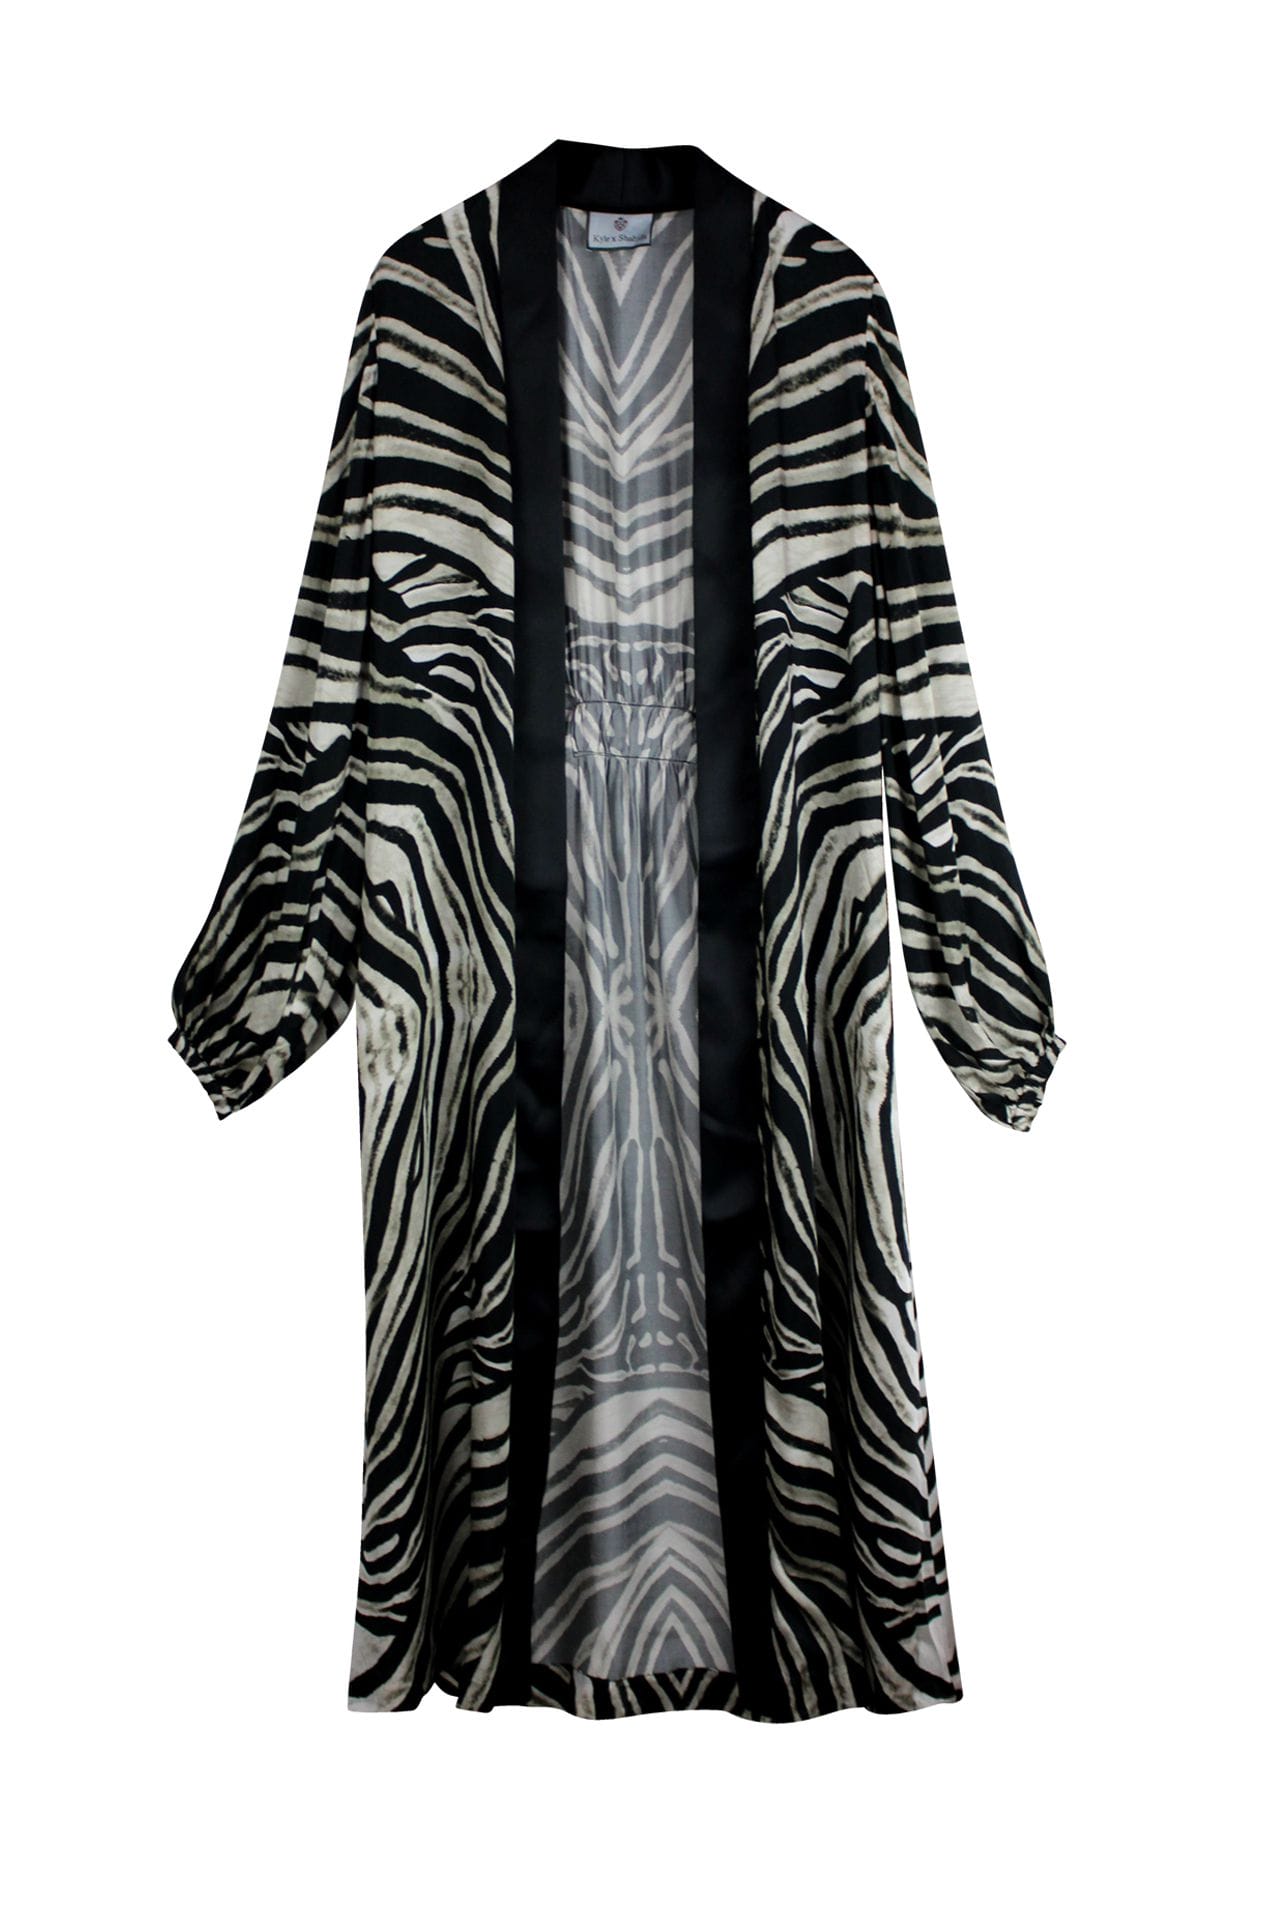 "Kyle X Shahida" "animal print kimono" "washable silk robe"  "silk robes for women" "long kimono robe womens" 